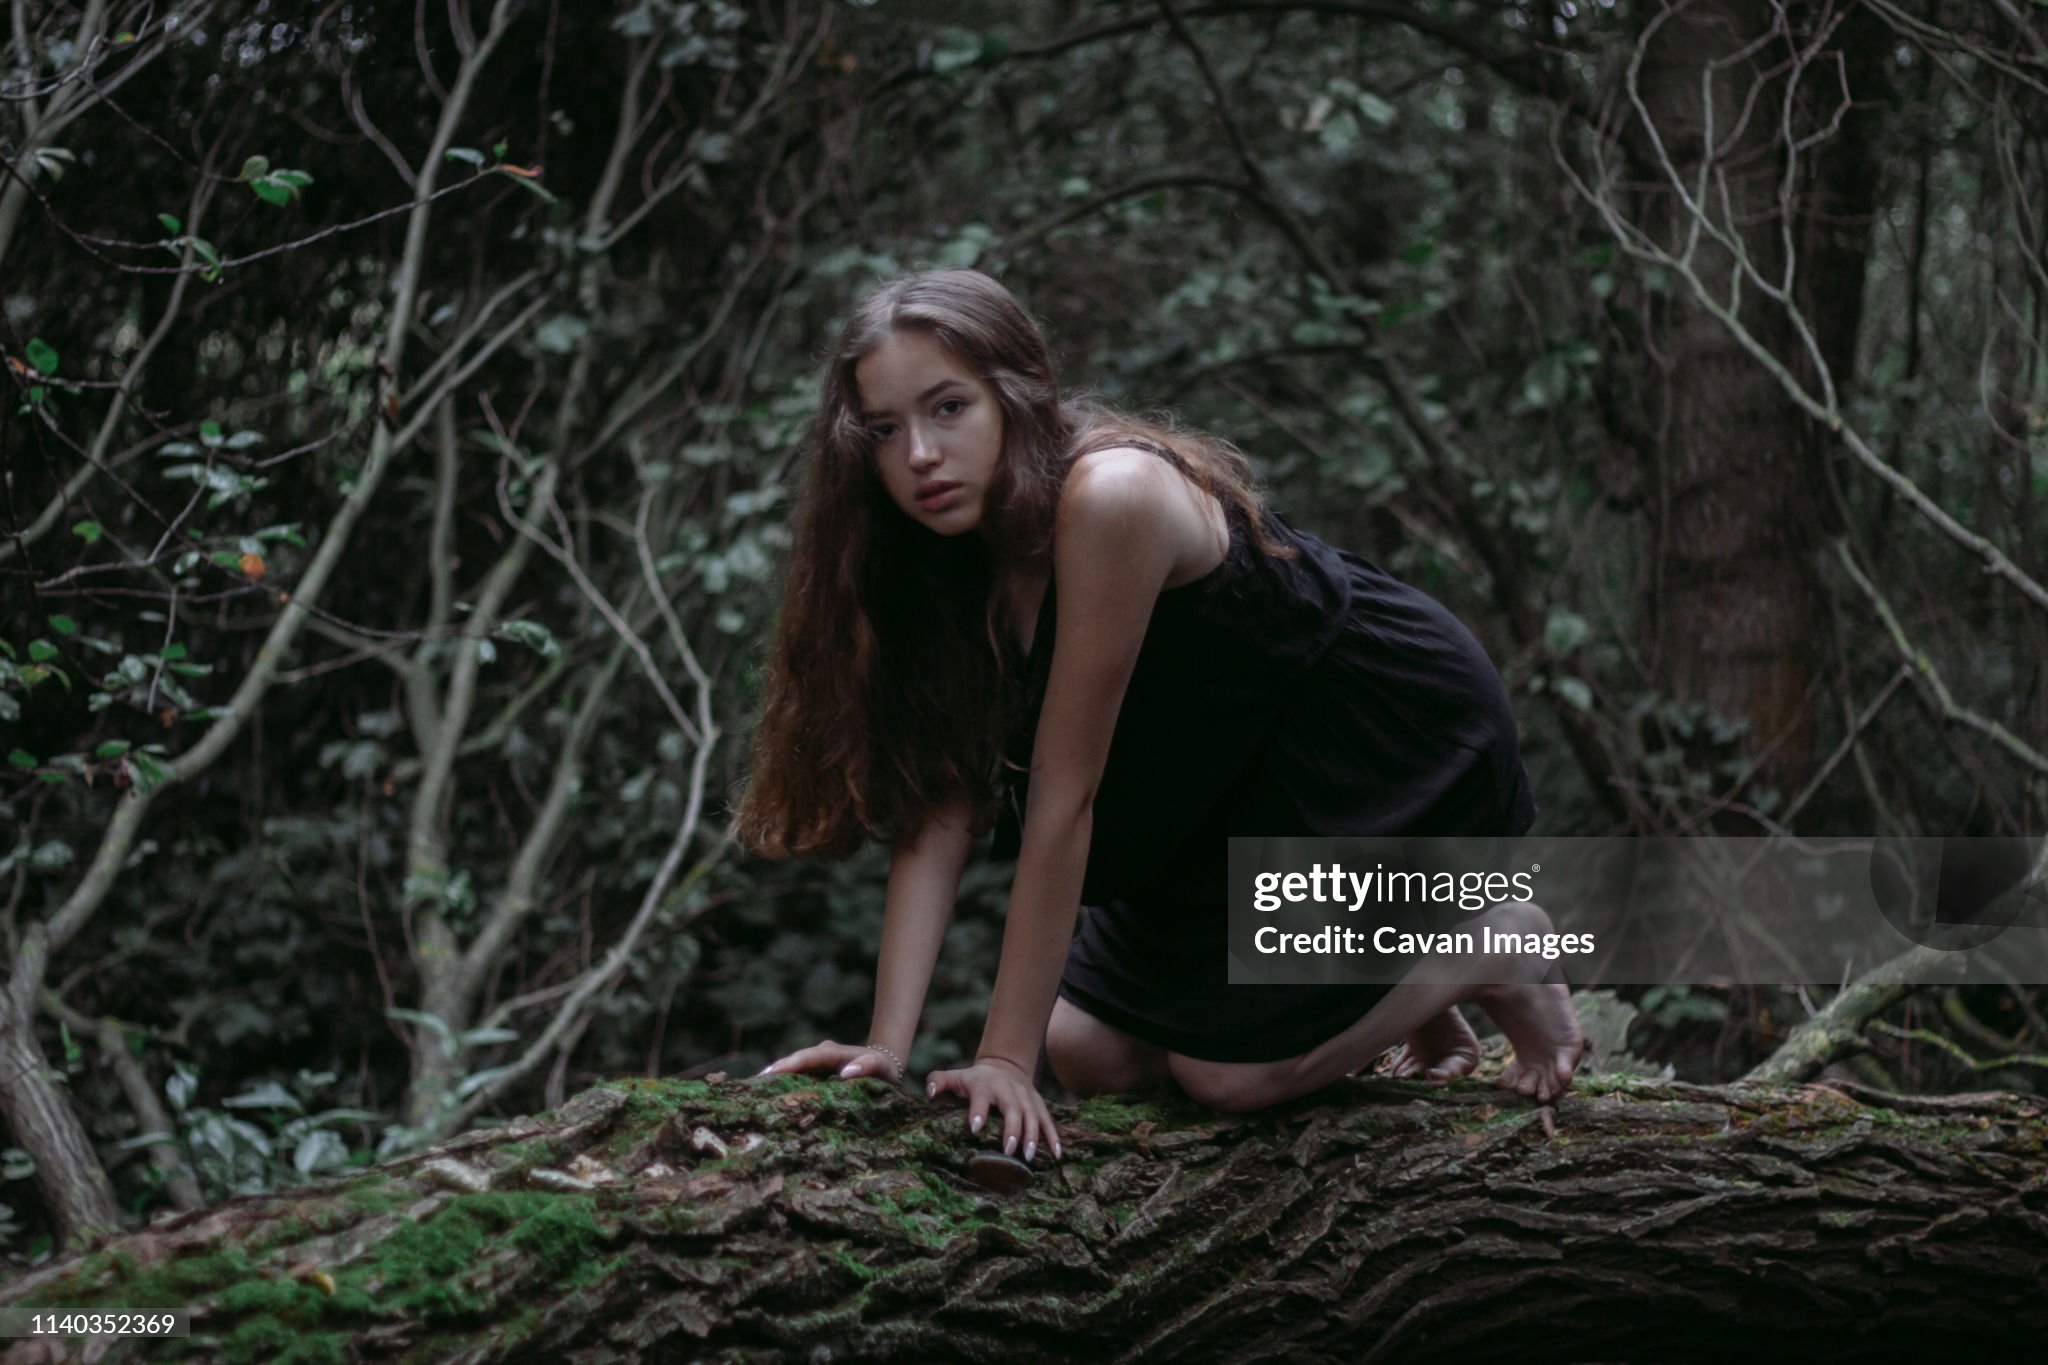 https://media.gettyimages.com/id/1140352369/photo/girl-crawling-on-a-tree-on-her-knees.jpg?s=2048x2048&amp;w=gi&amp;k=20&amp;c=qAsWu-PMd_JAOee-Nyoeln4gOAloV5qaWuLaNbr0ubc=